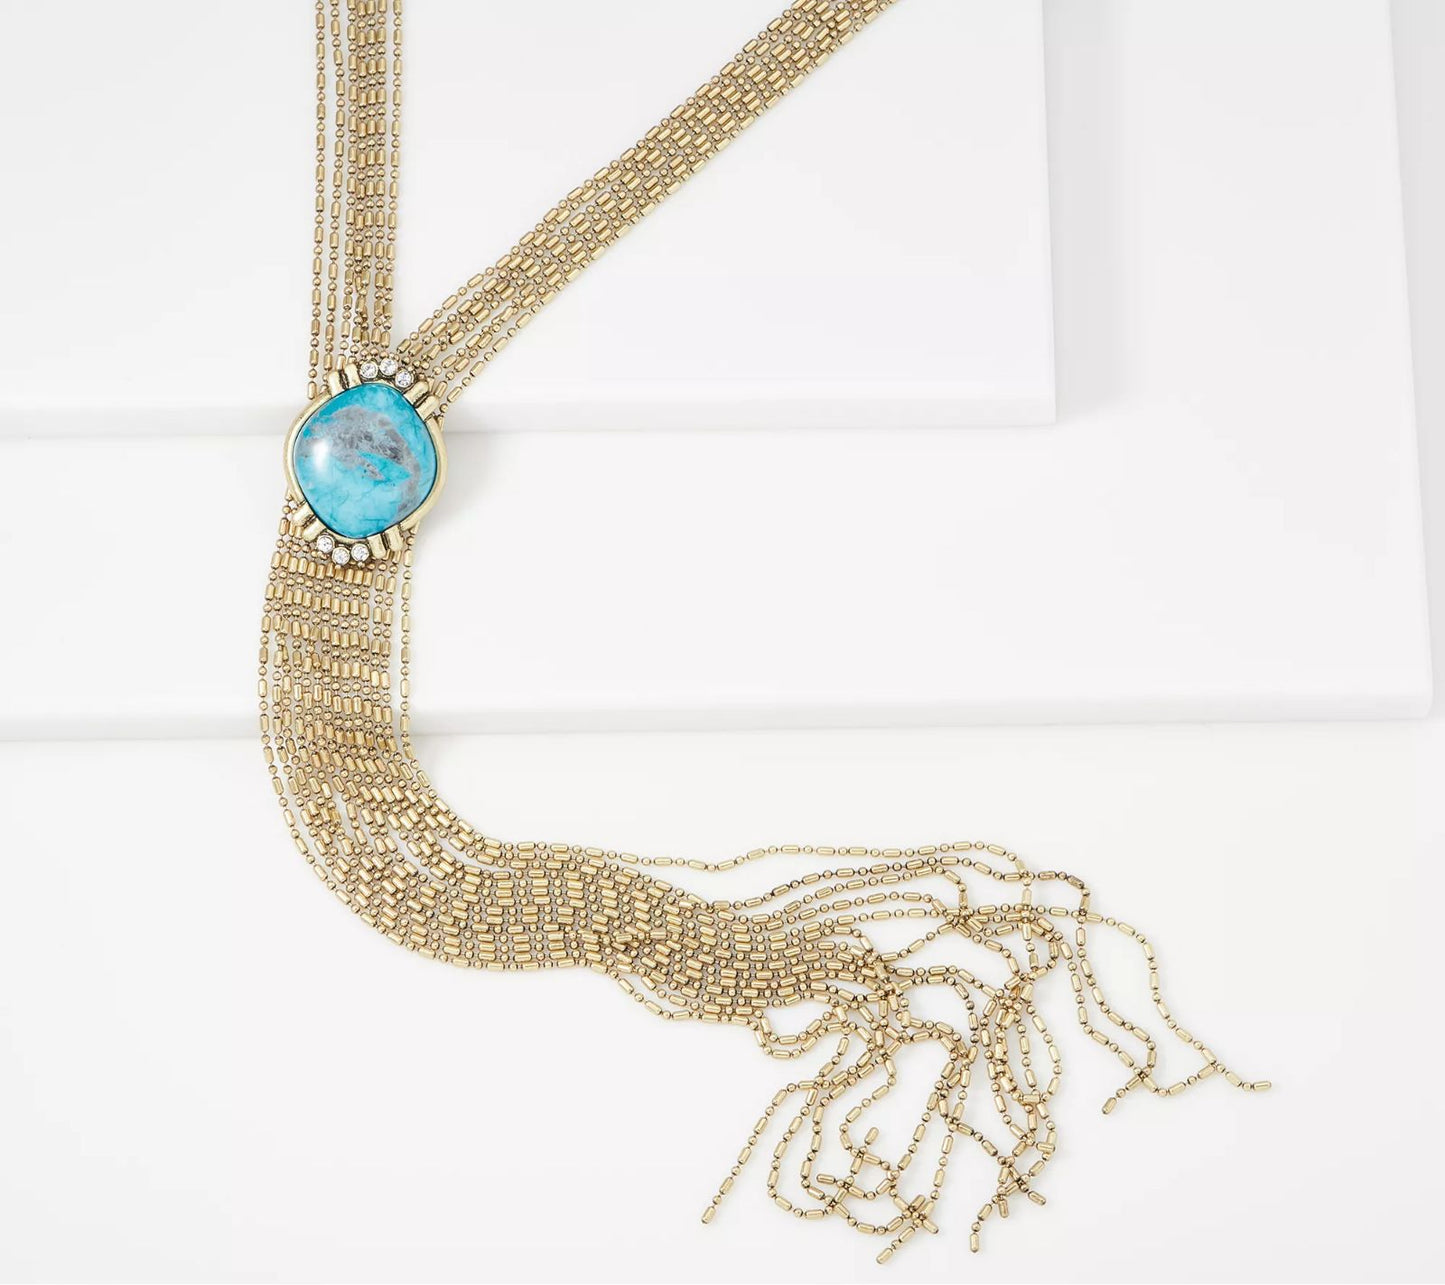 LOGO Links Marquise Turquoise, Crystal Bead Tassel Necklace, GoldTone, Sz 26"+3"